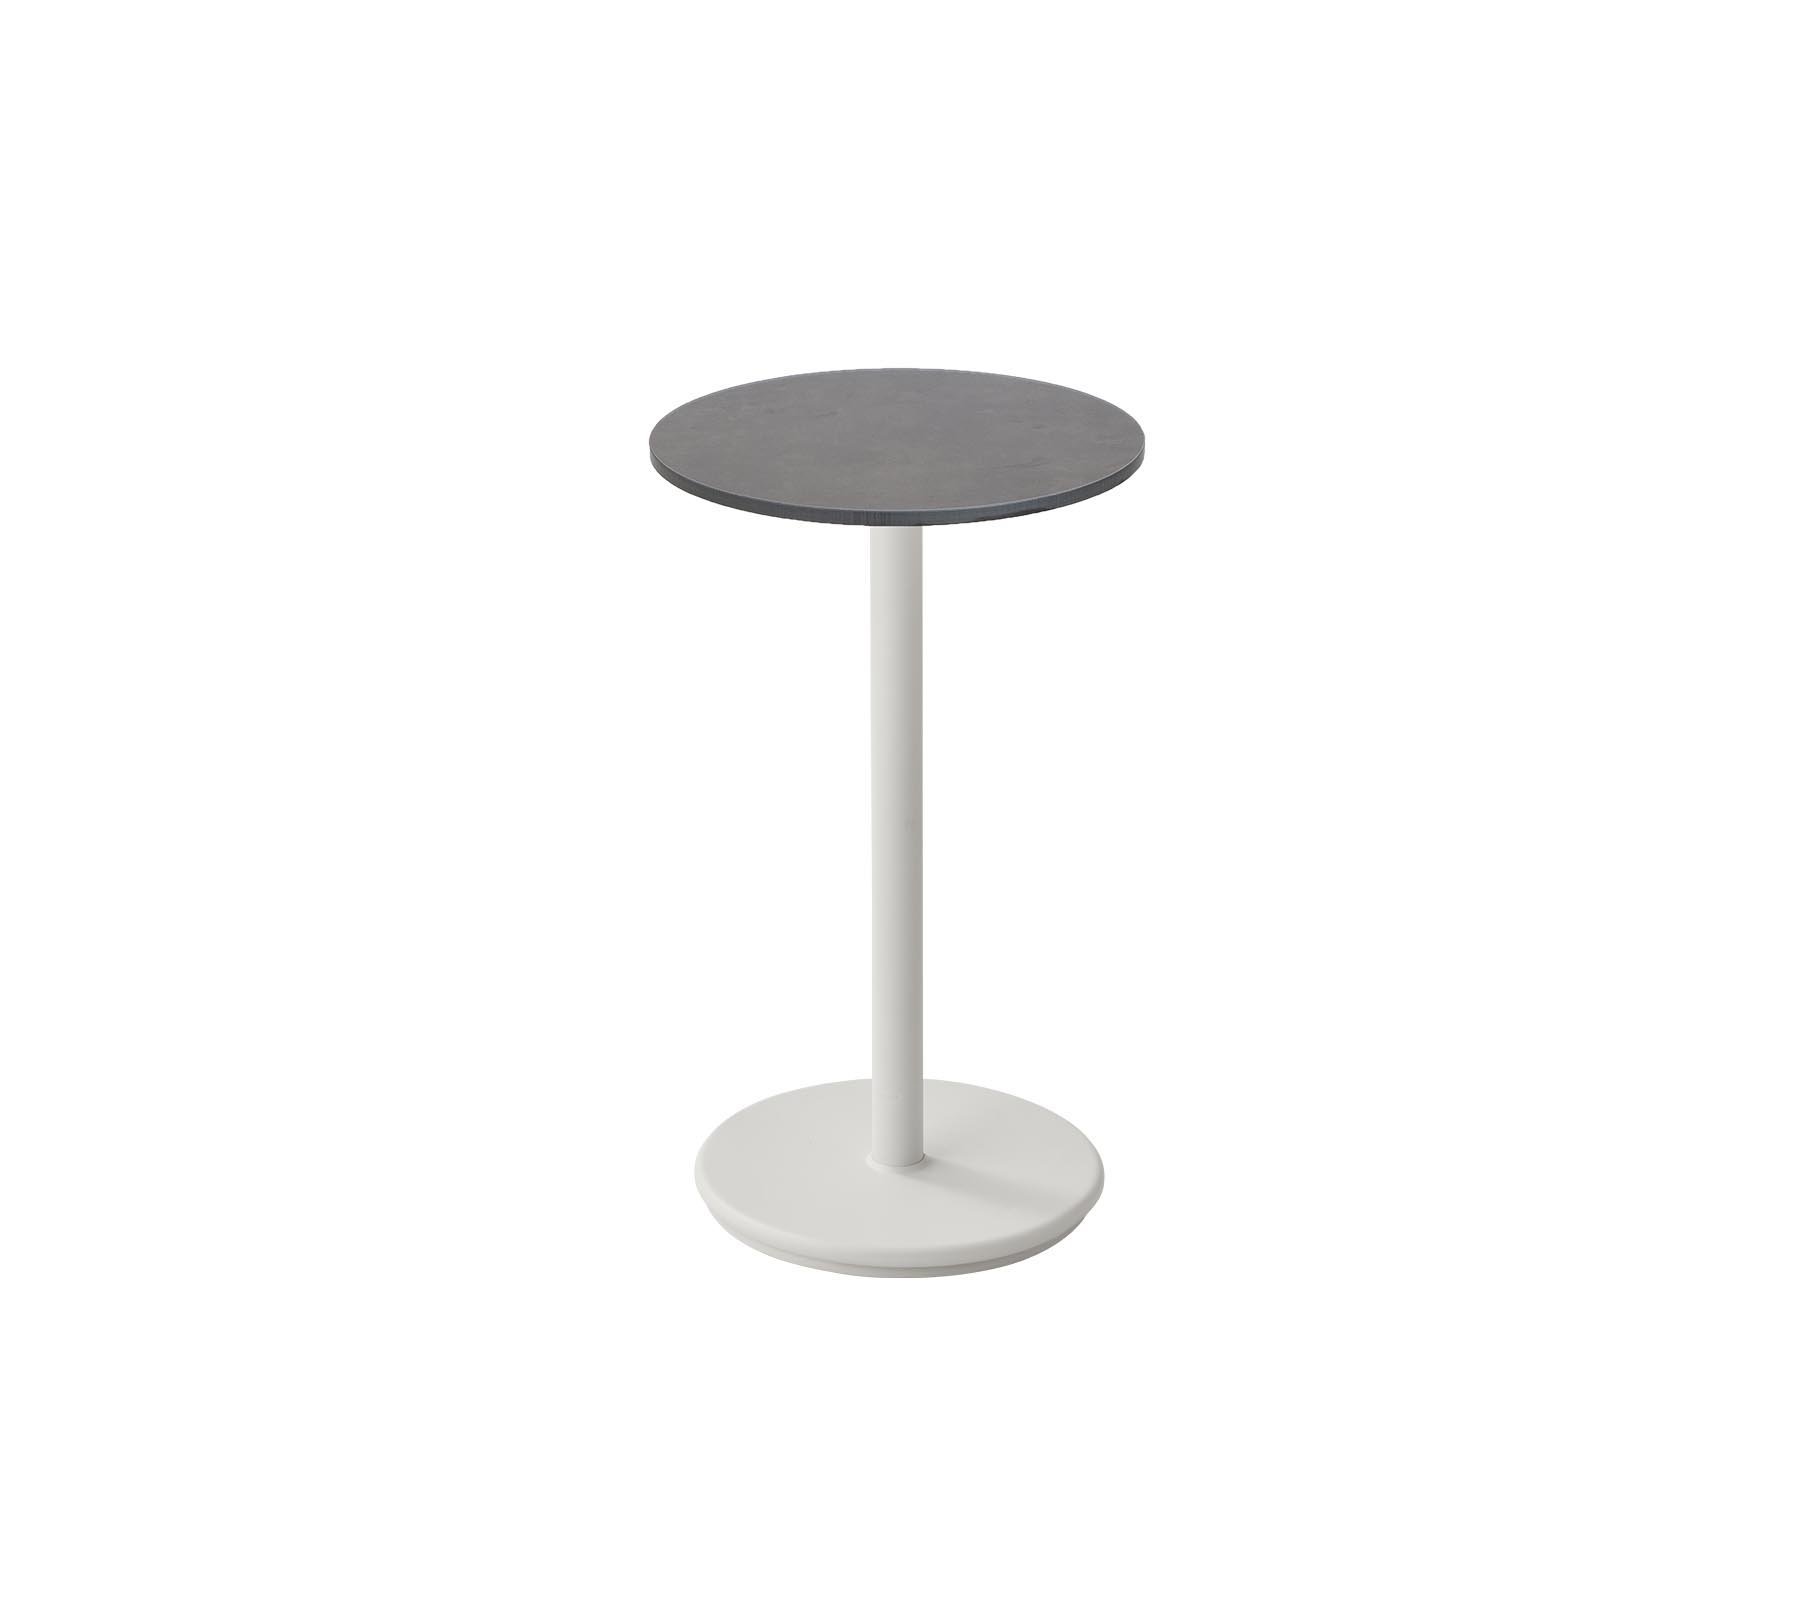 Go Cafe Table bar from Cane-line, designed by Cane-line Design Team